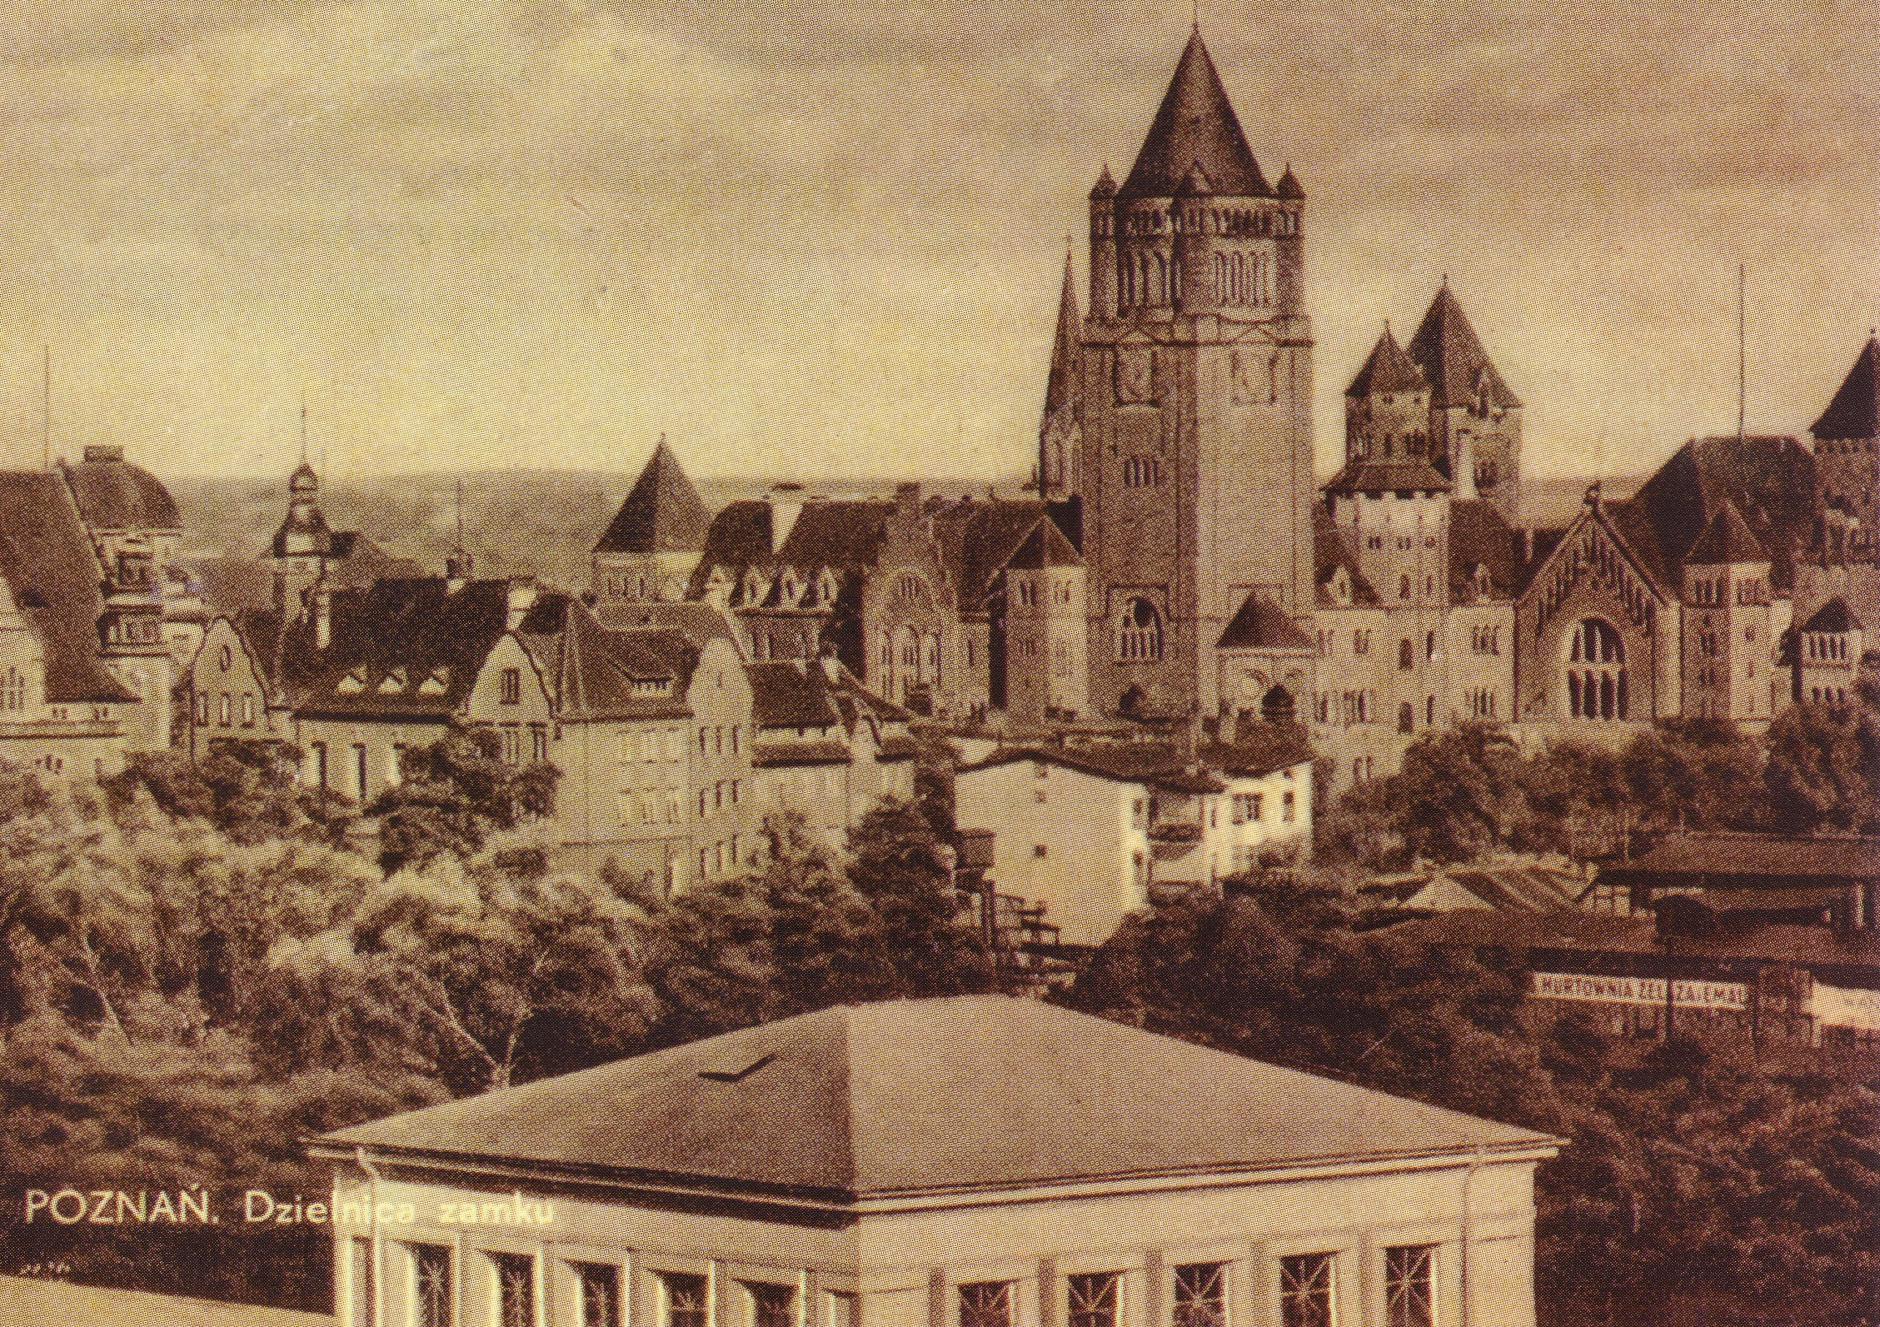 (1919-1939) Dzielnica Zamkowa.